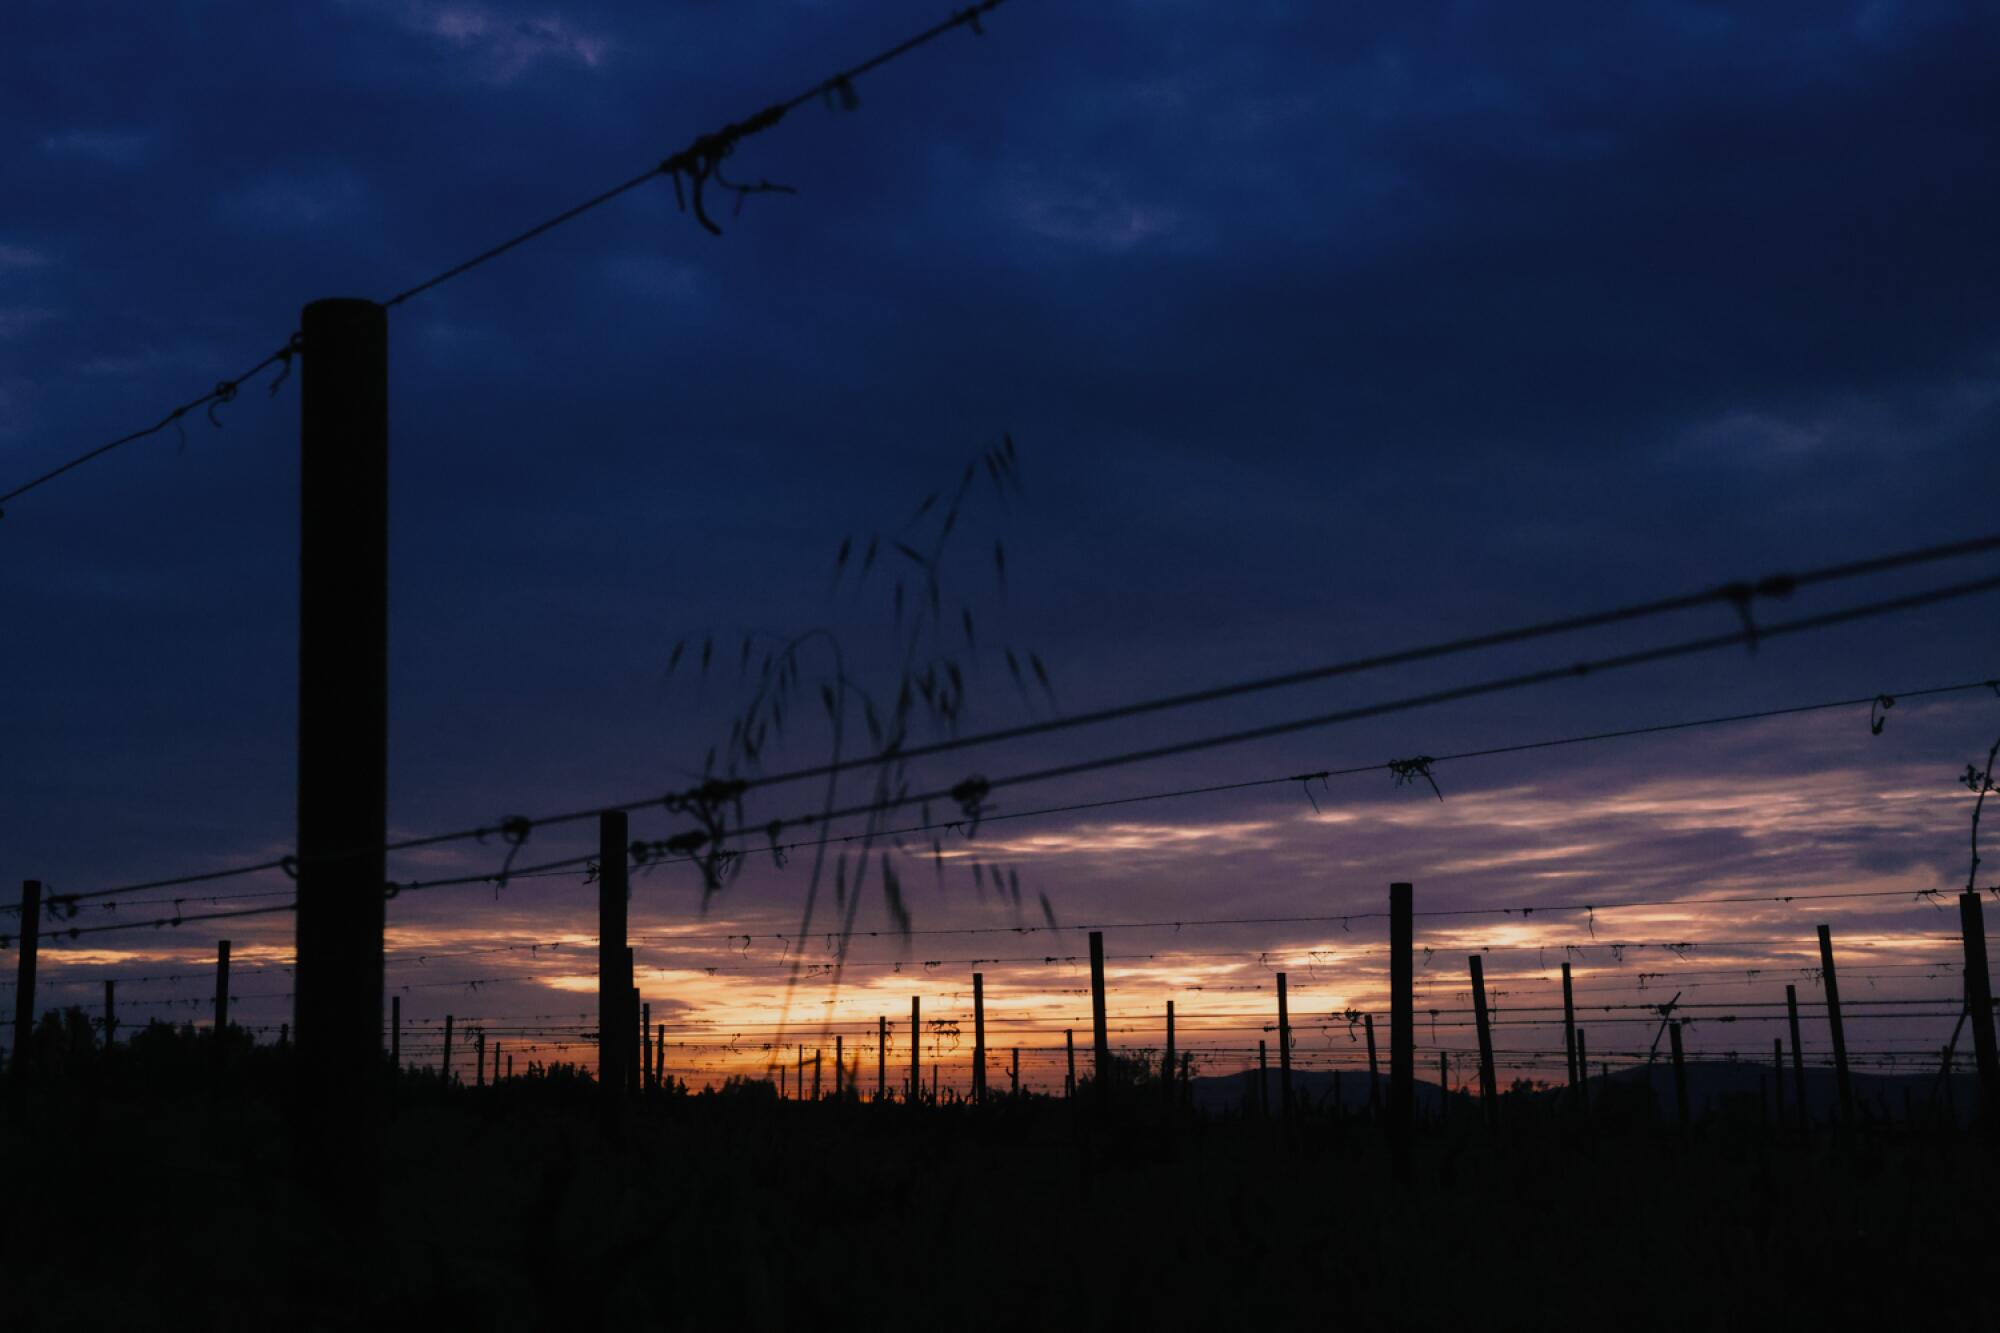 Night falls on Natalia Badan's winery, Mogor Badan, an organic winemaker in the Valley.